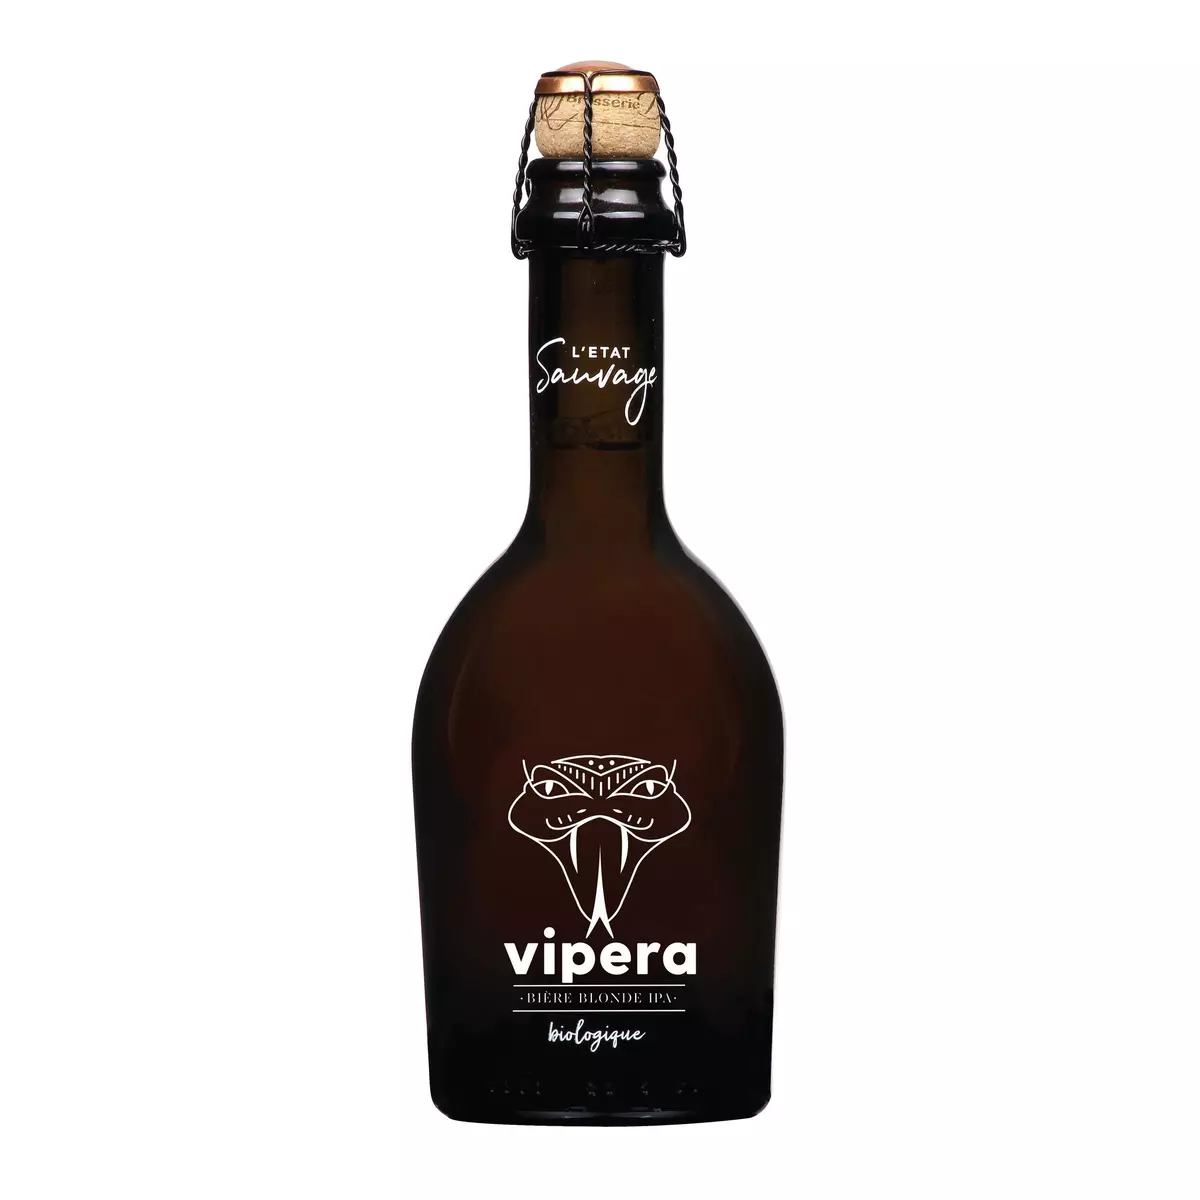 L'ETAT SAUVAGE Bière blonde IPA bio vipera 5.8% bouteille 33cl